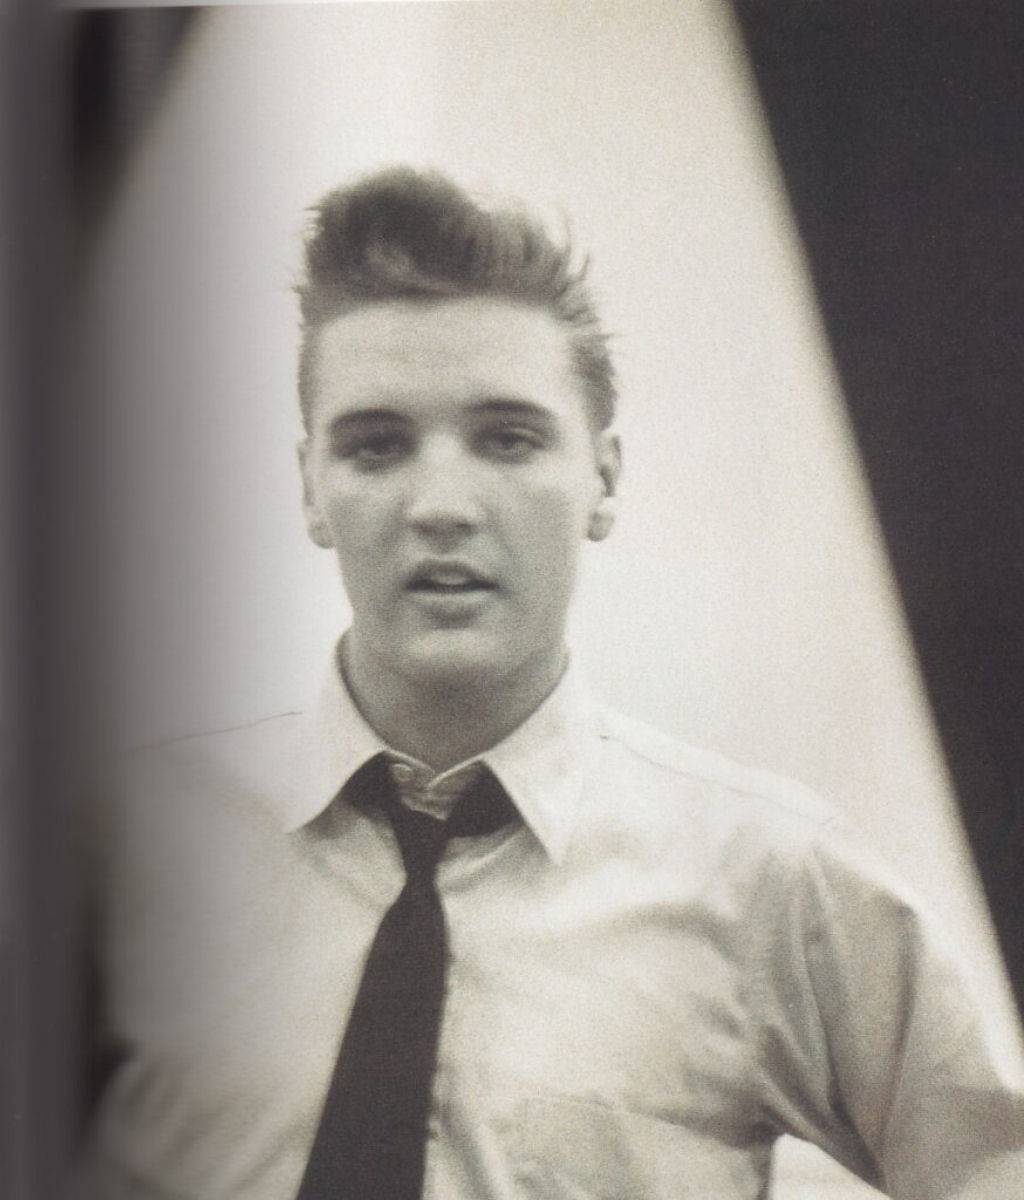 Fotos antigas de Elvis Presley mostram que ele era realmente loiro 07